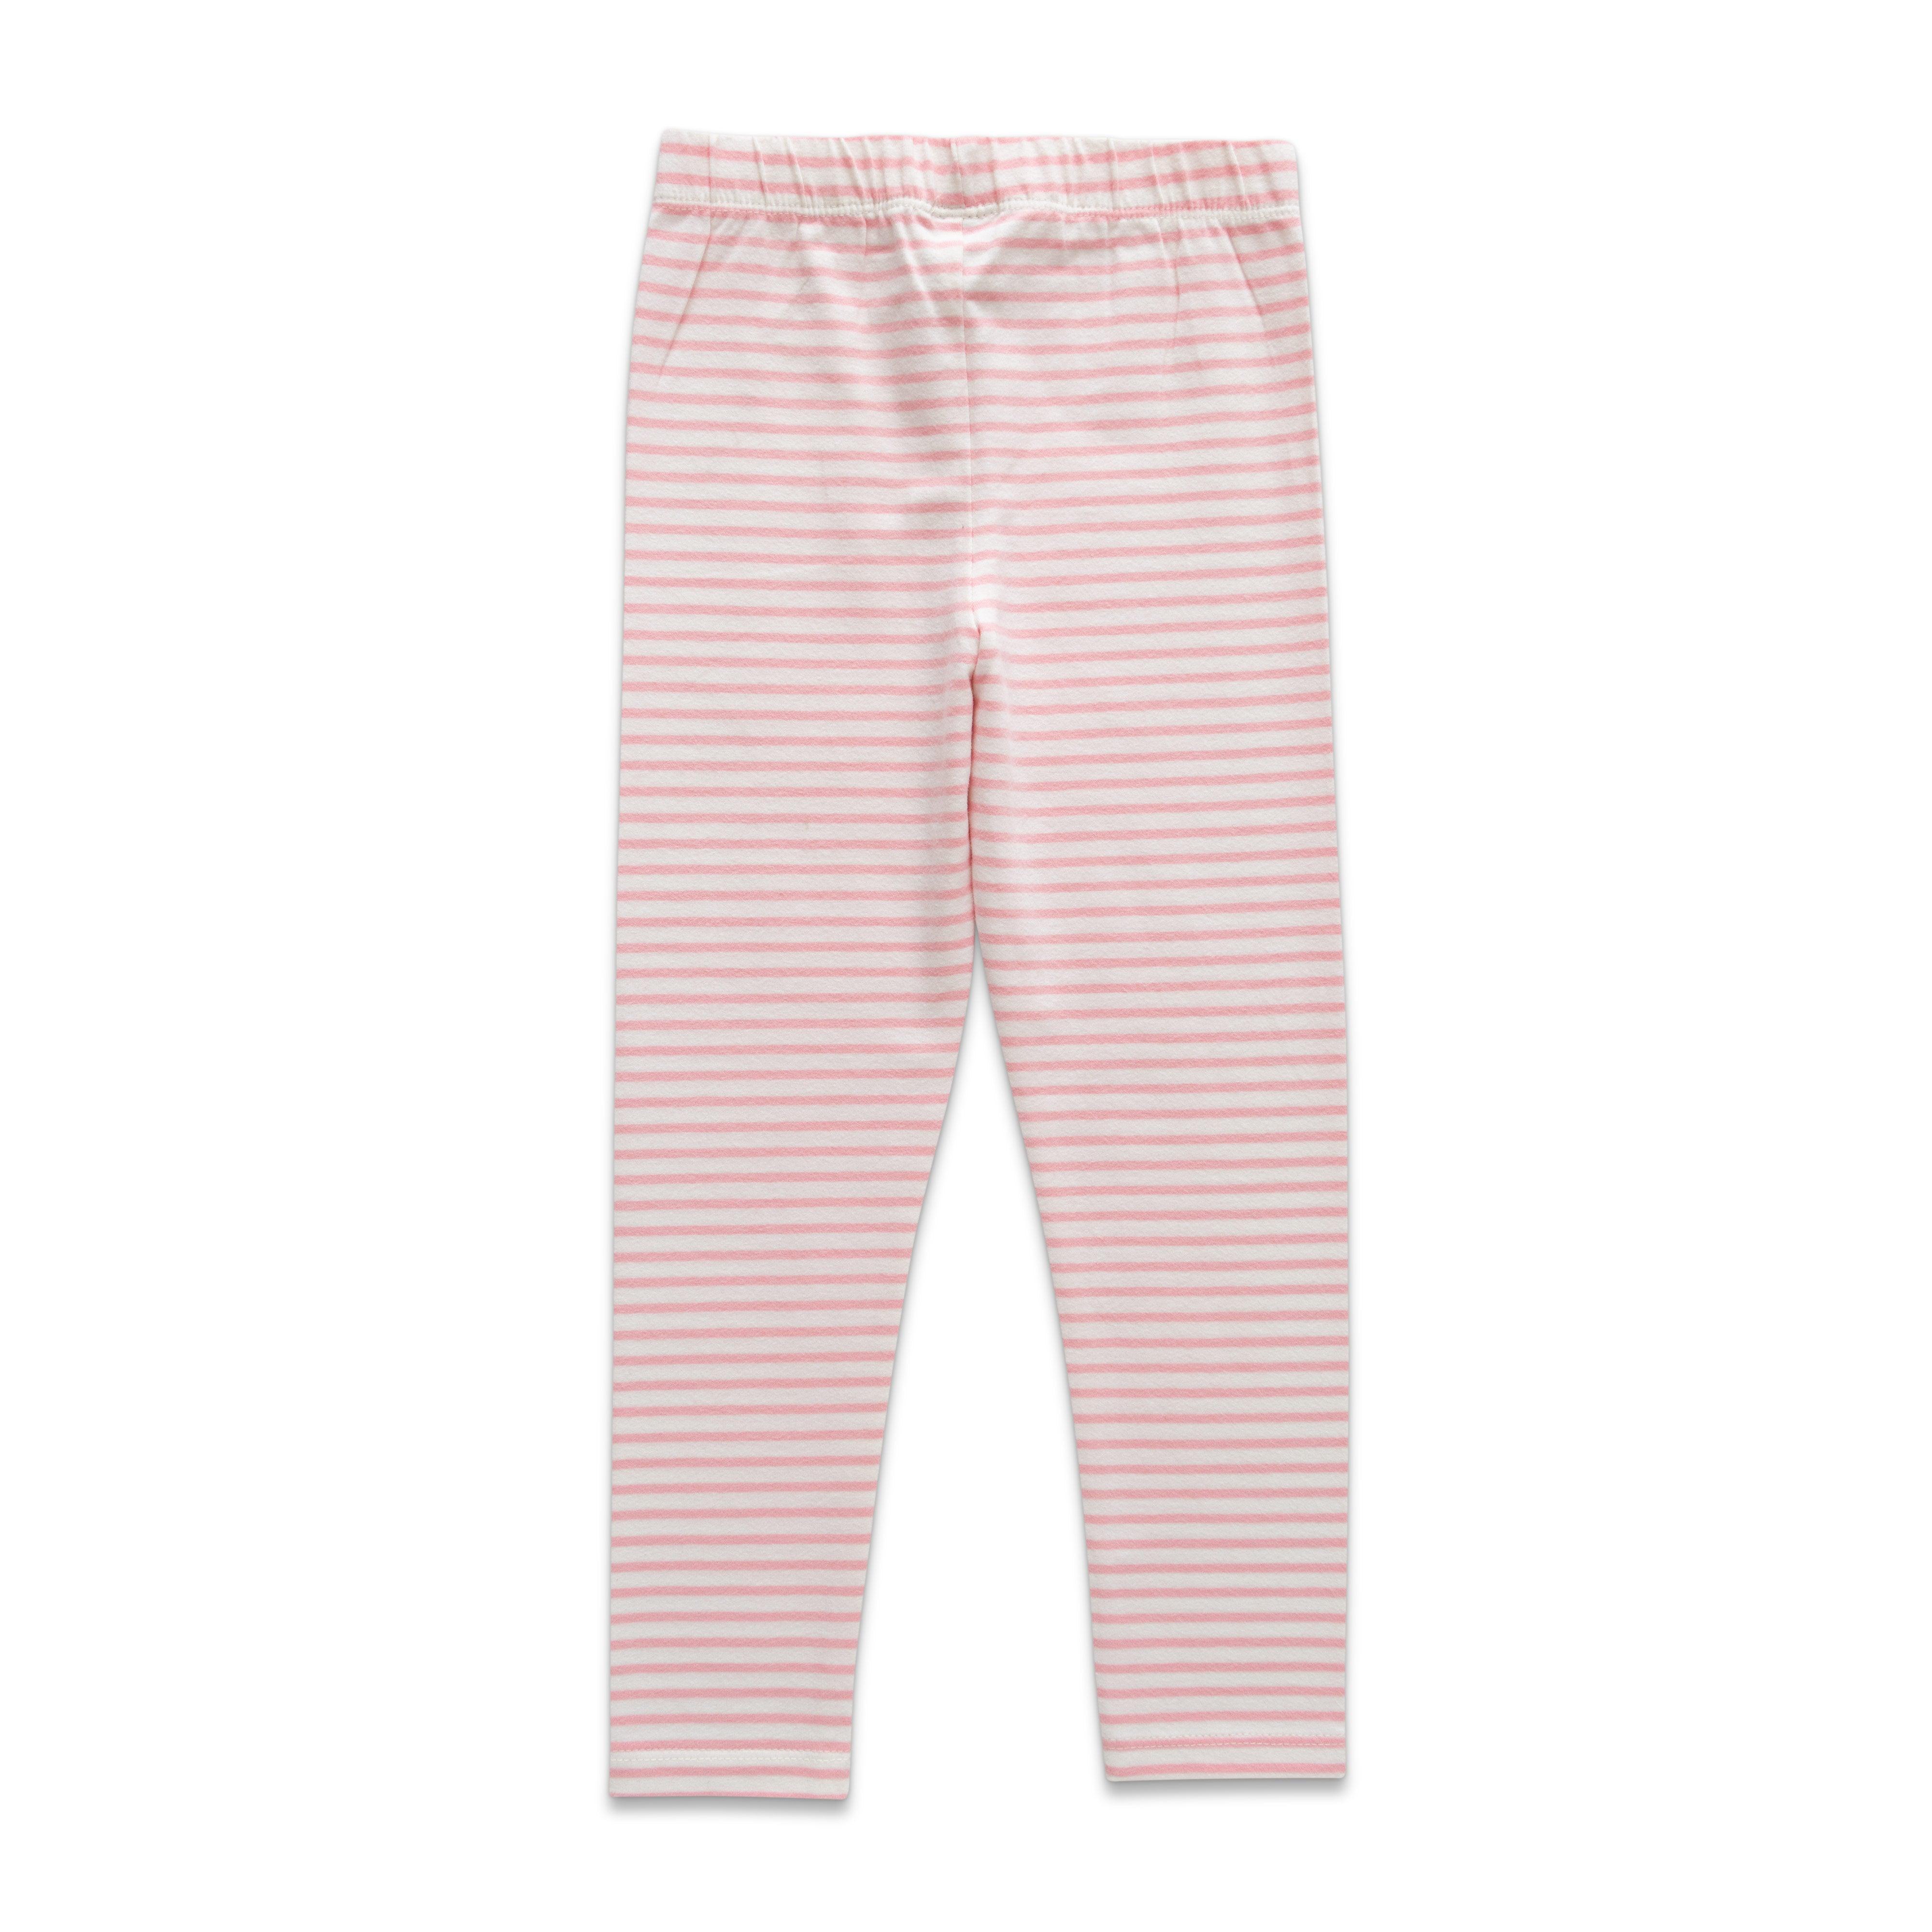 Girls Toddlers Stripes Leggings Light Pink - Juscubs